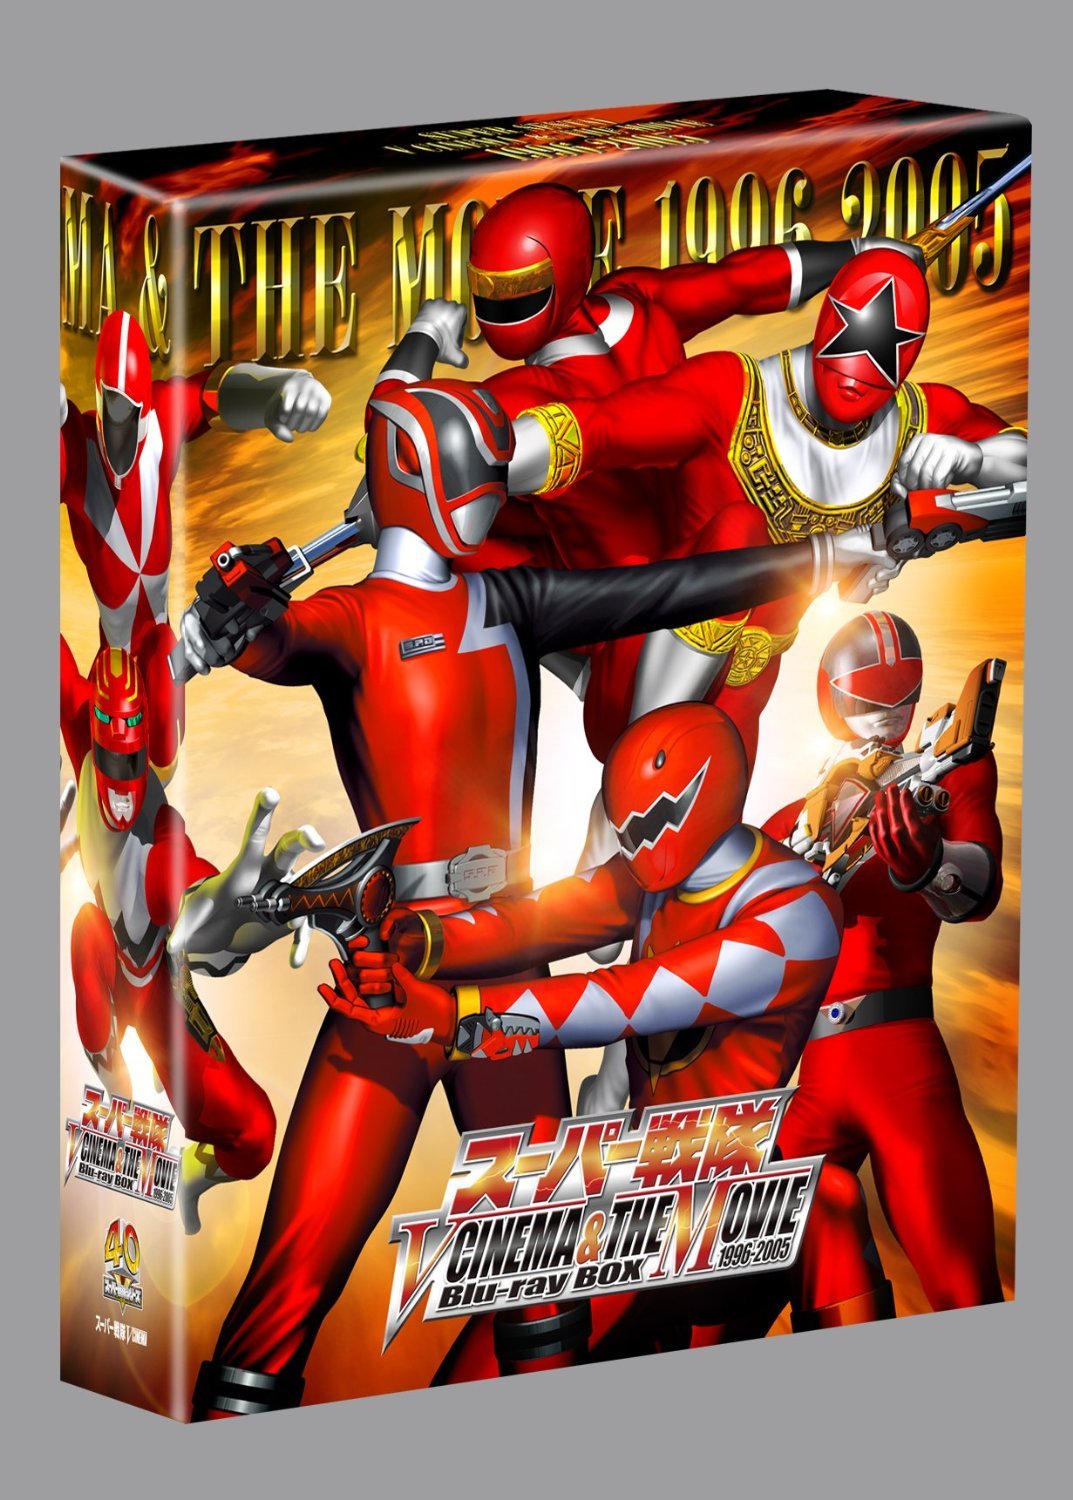 Super Sentai V-Cinema and The Movie Blu-ray Box 1 Blu-ray 